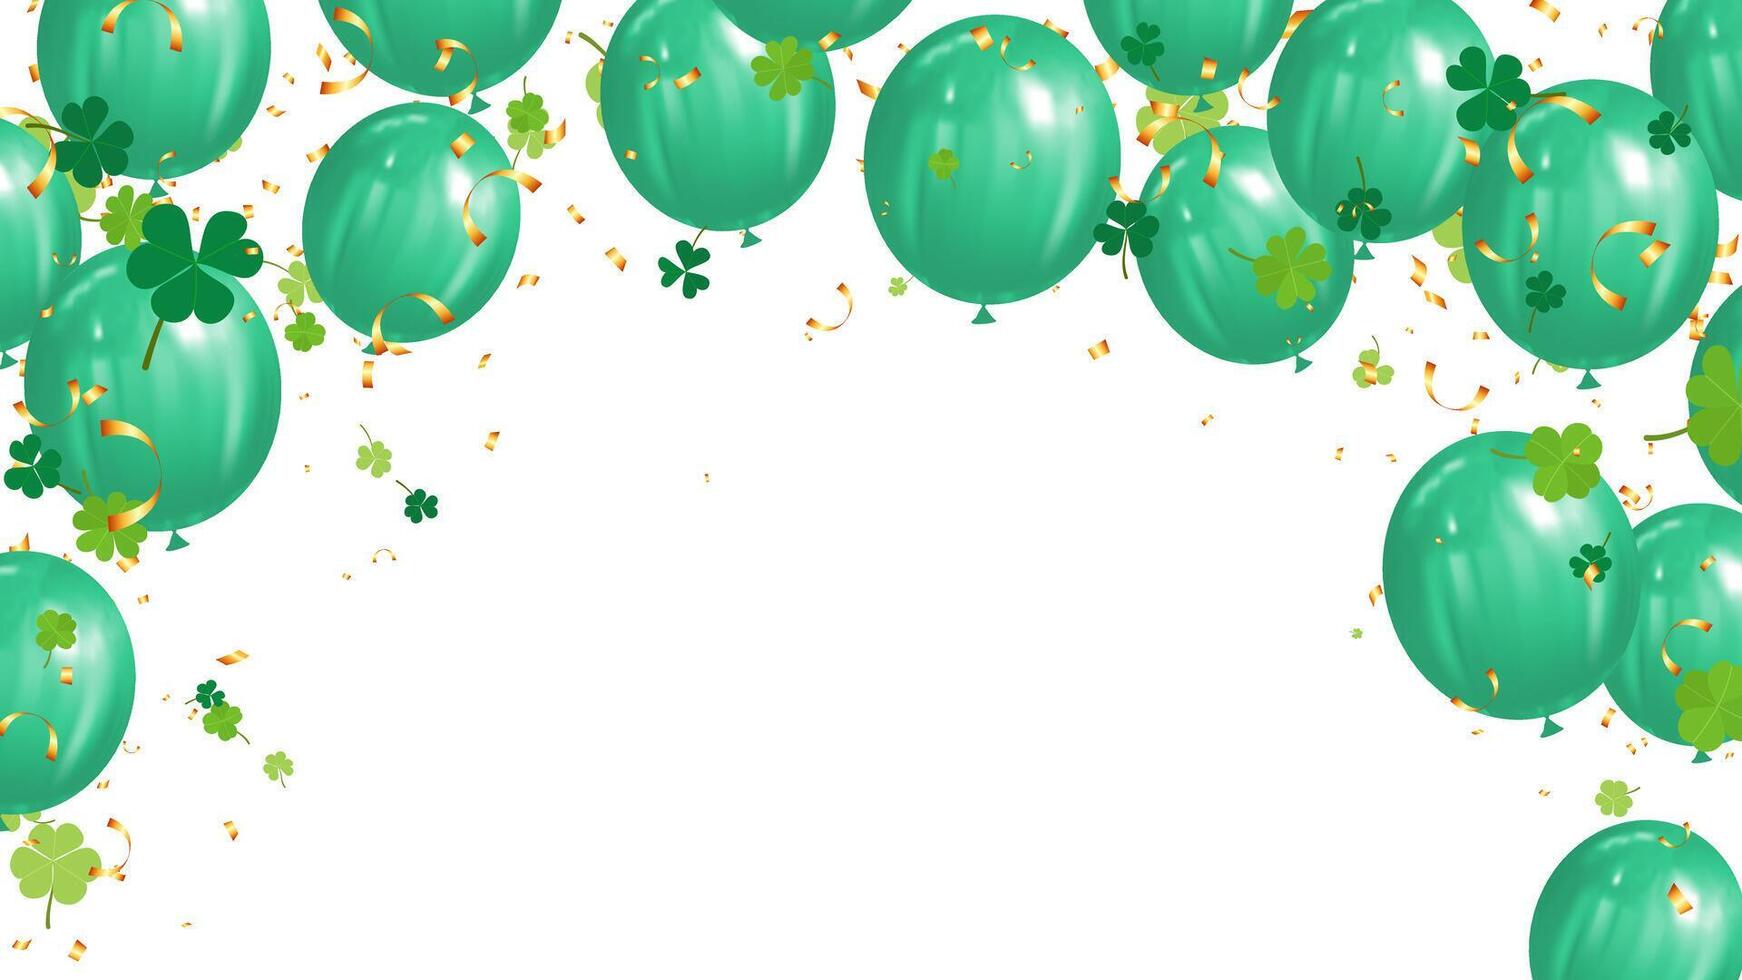 banier groen ballonnen, Klaver bladeren en goud confetti luxe partij festival groet kaart ontwerp vector